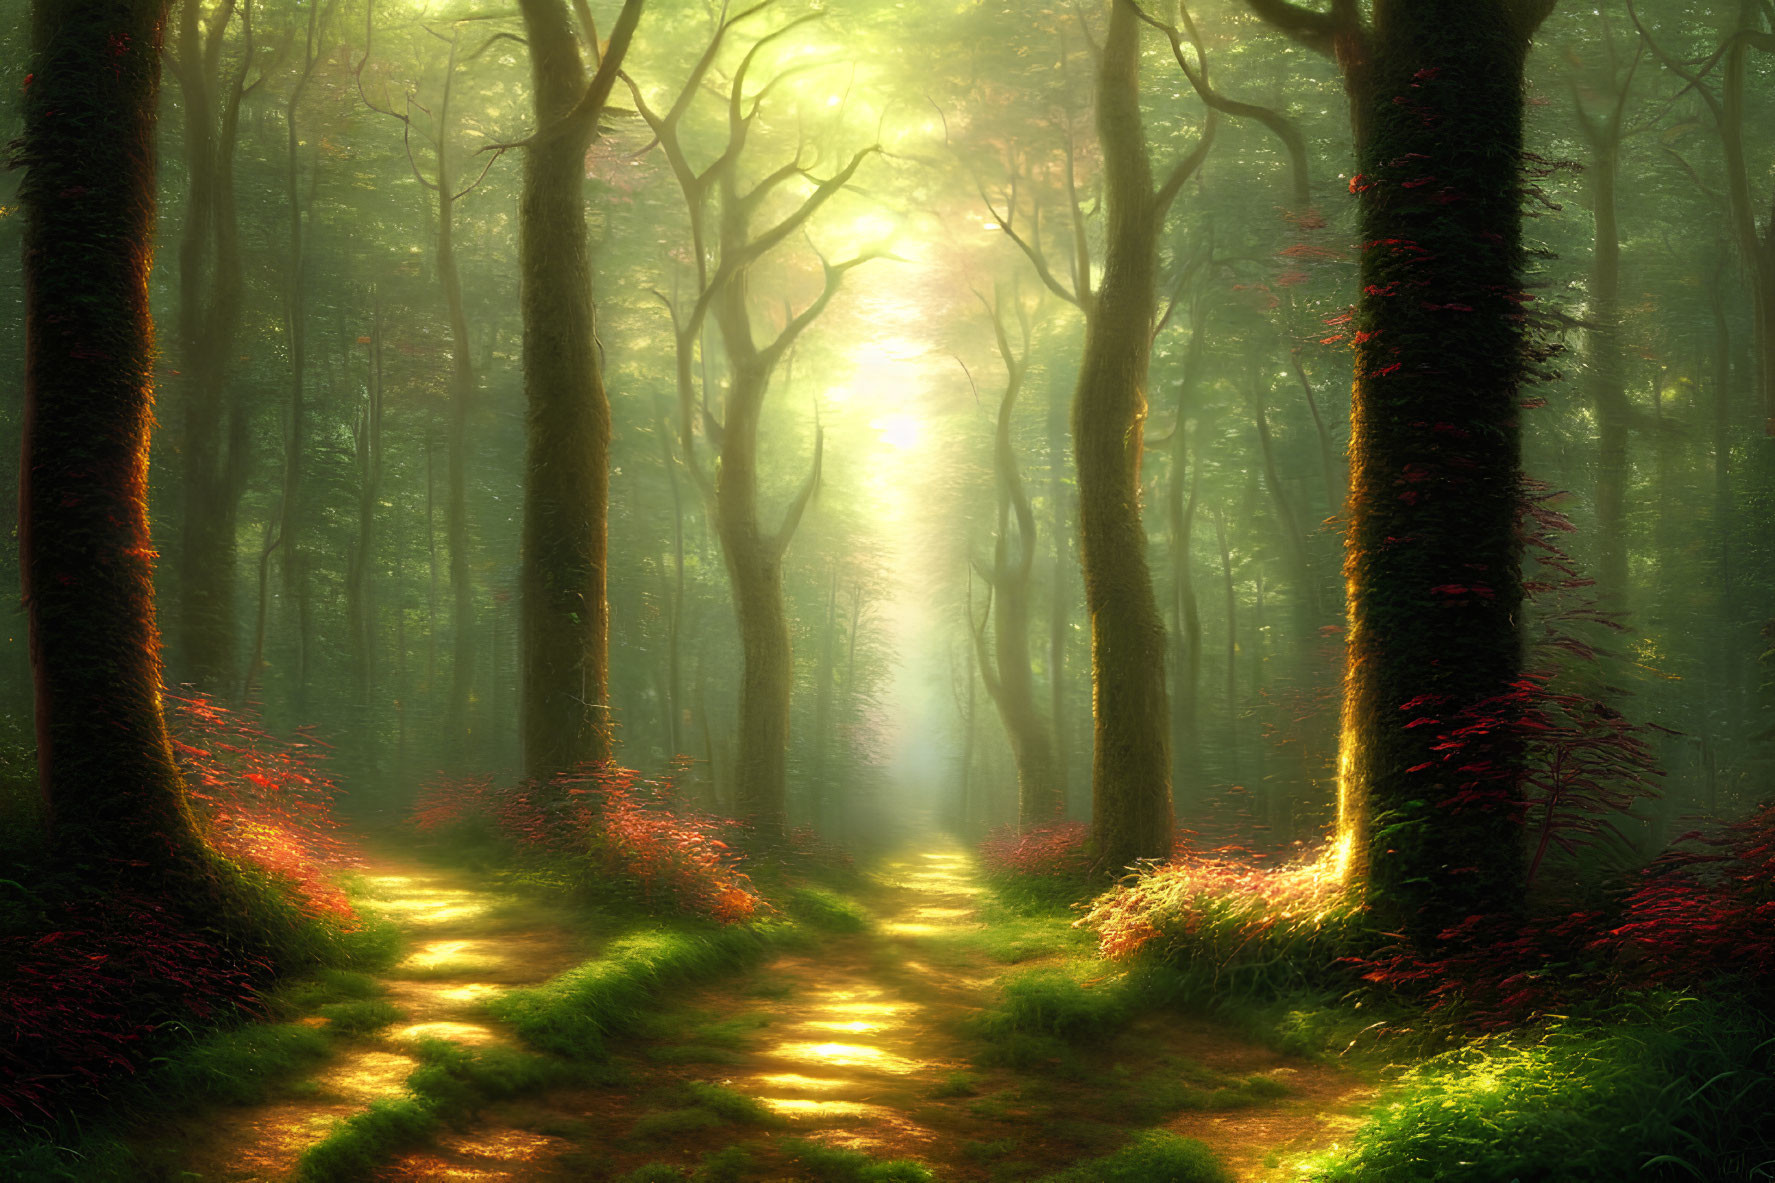 Forest scene: Sunlight filtering through dense trees, illuminating undergrowth.